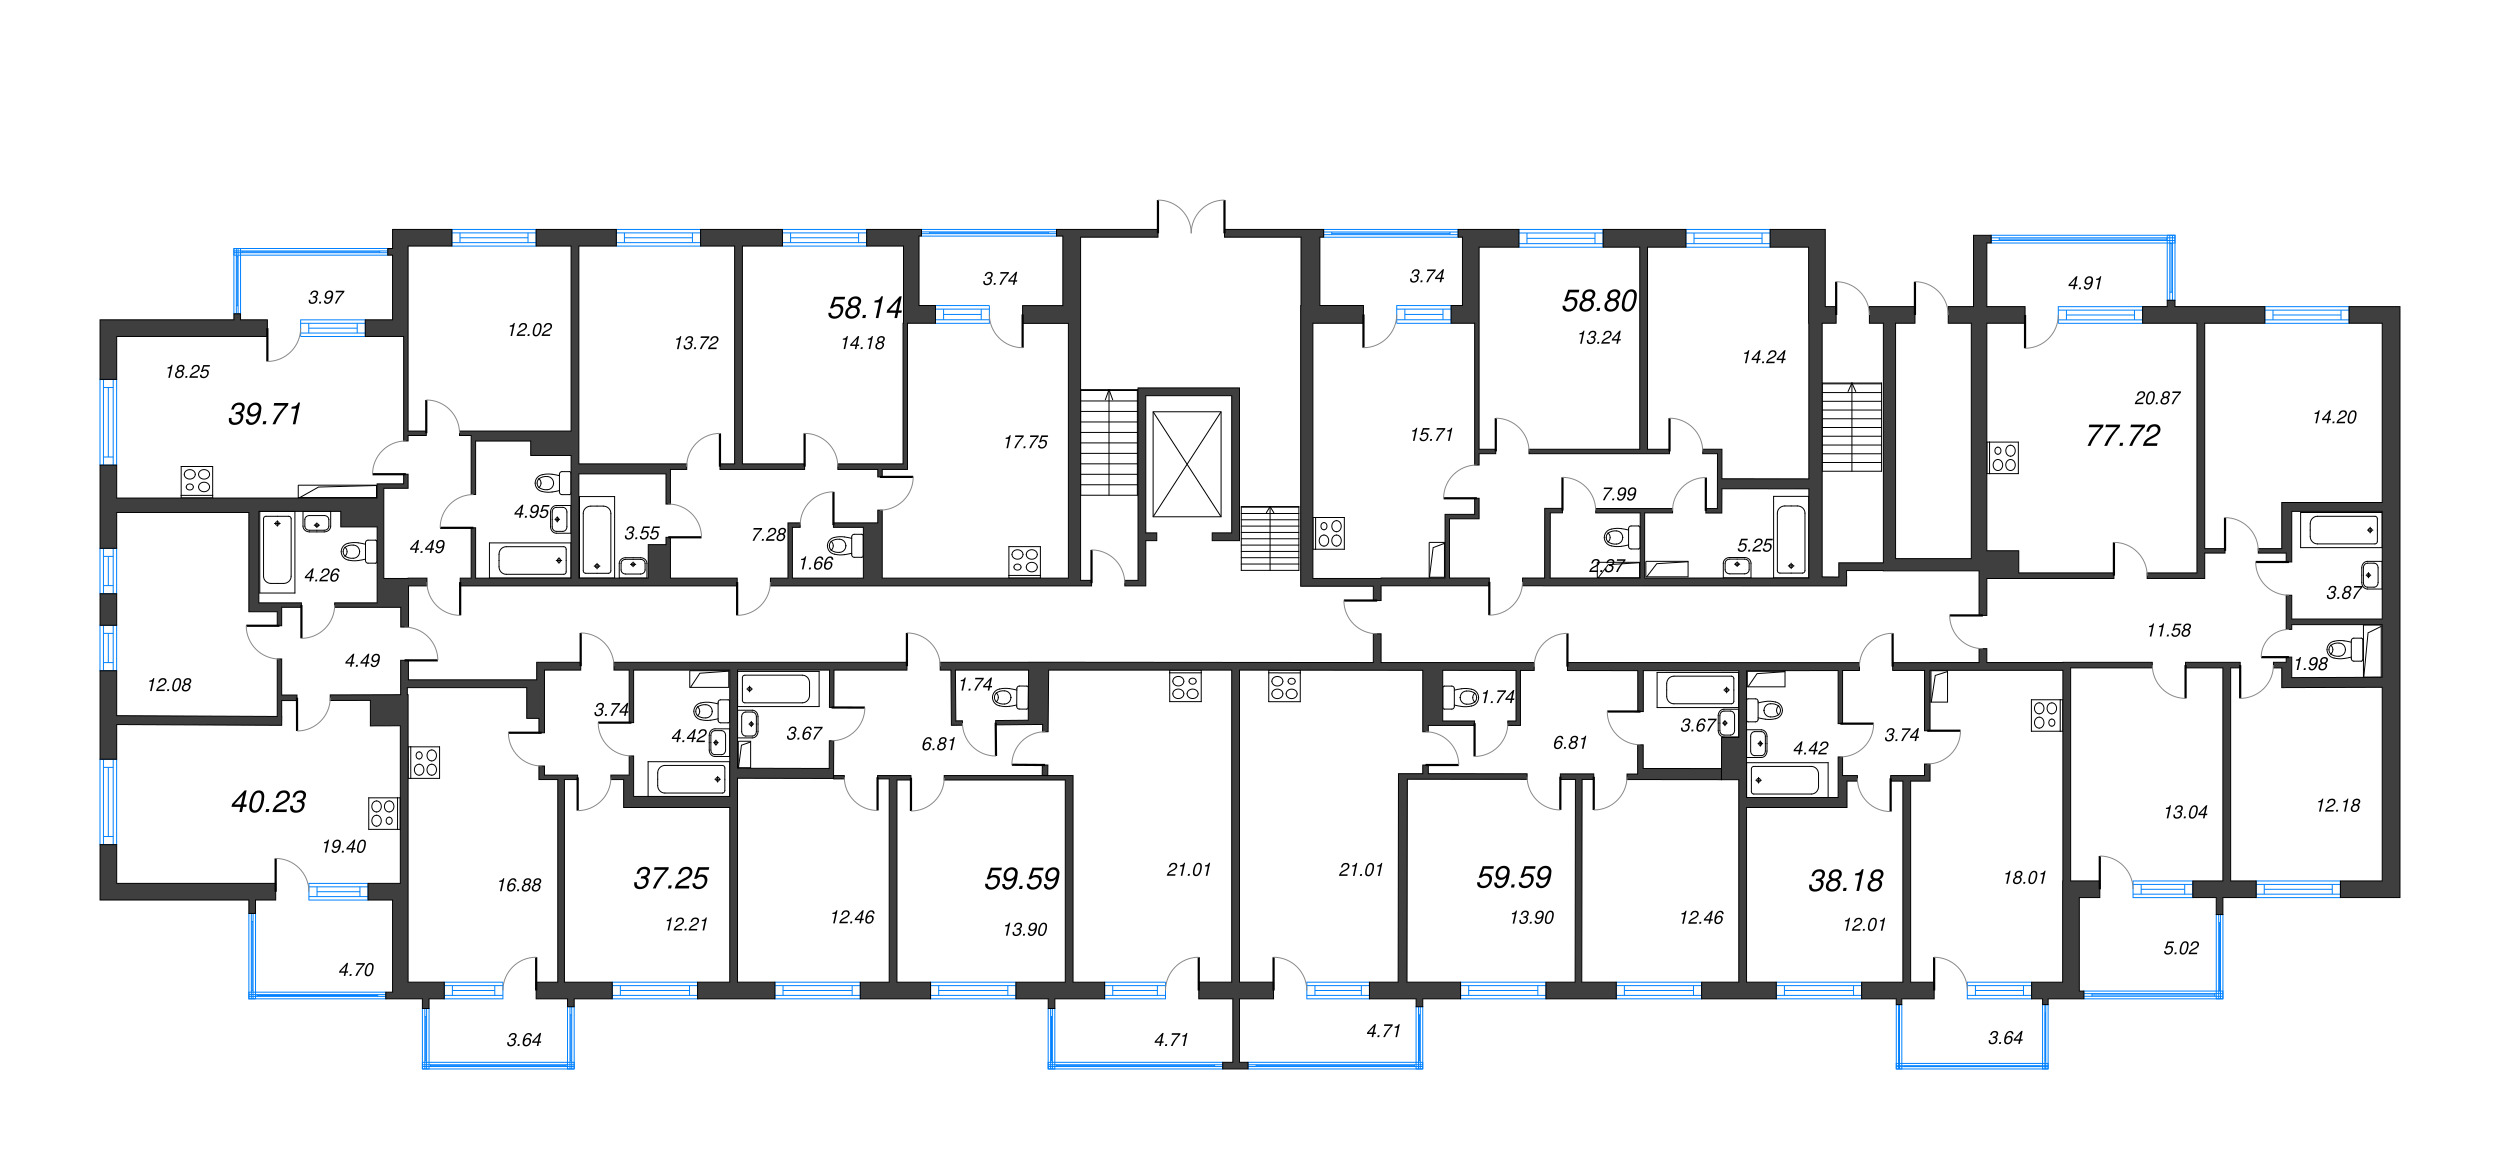 4-комнатная (Евро) квартира, 77.72 м² - планировка этажа